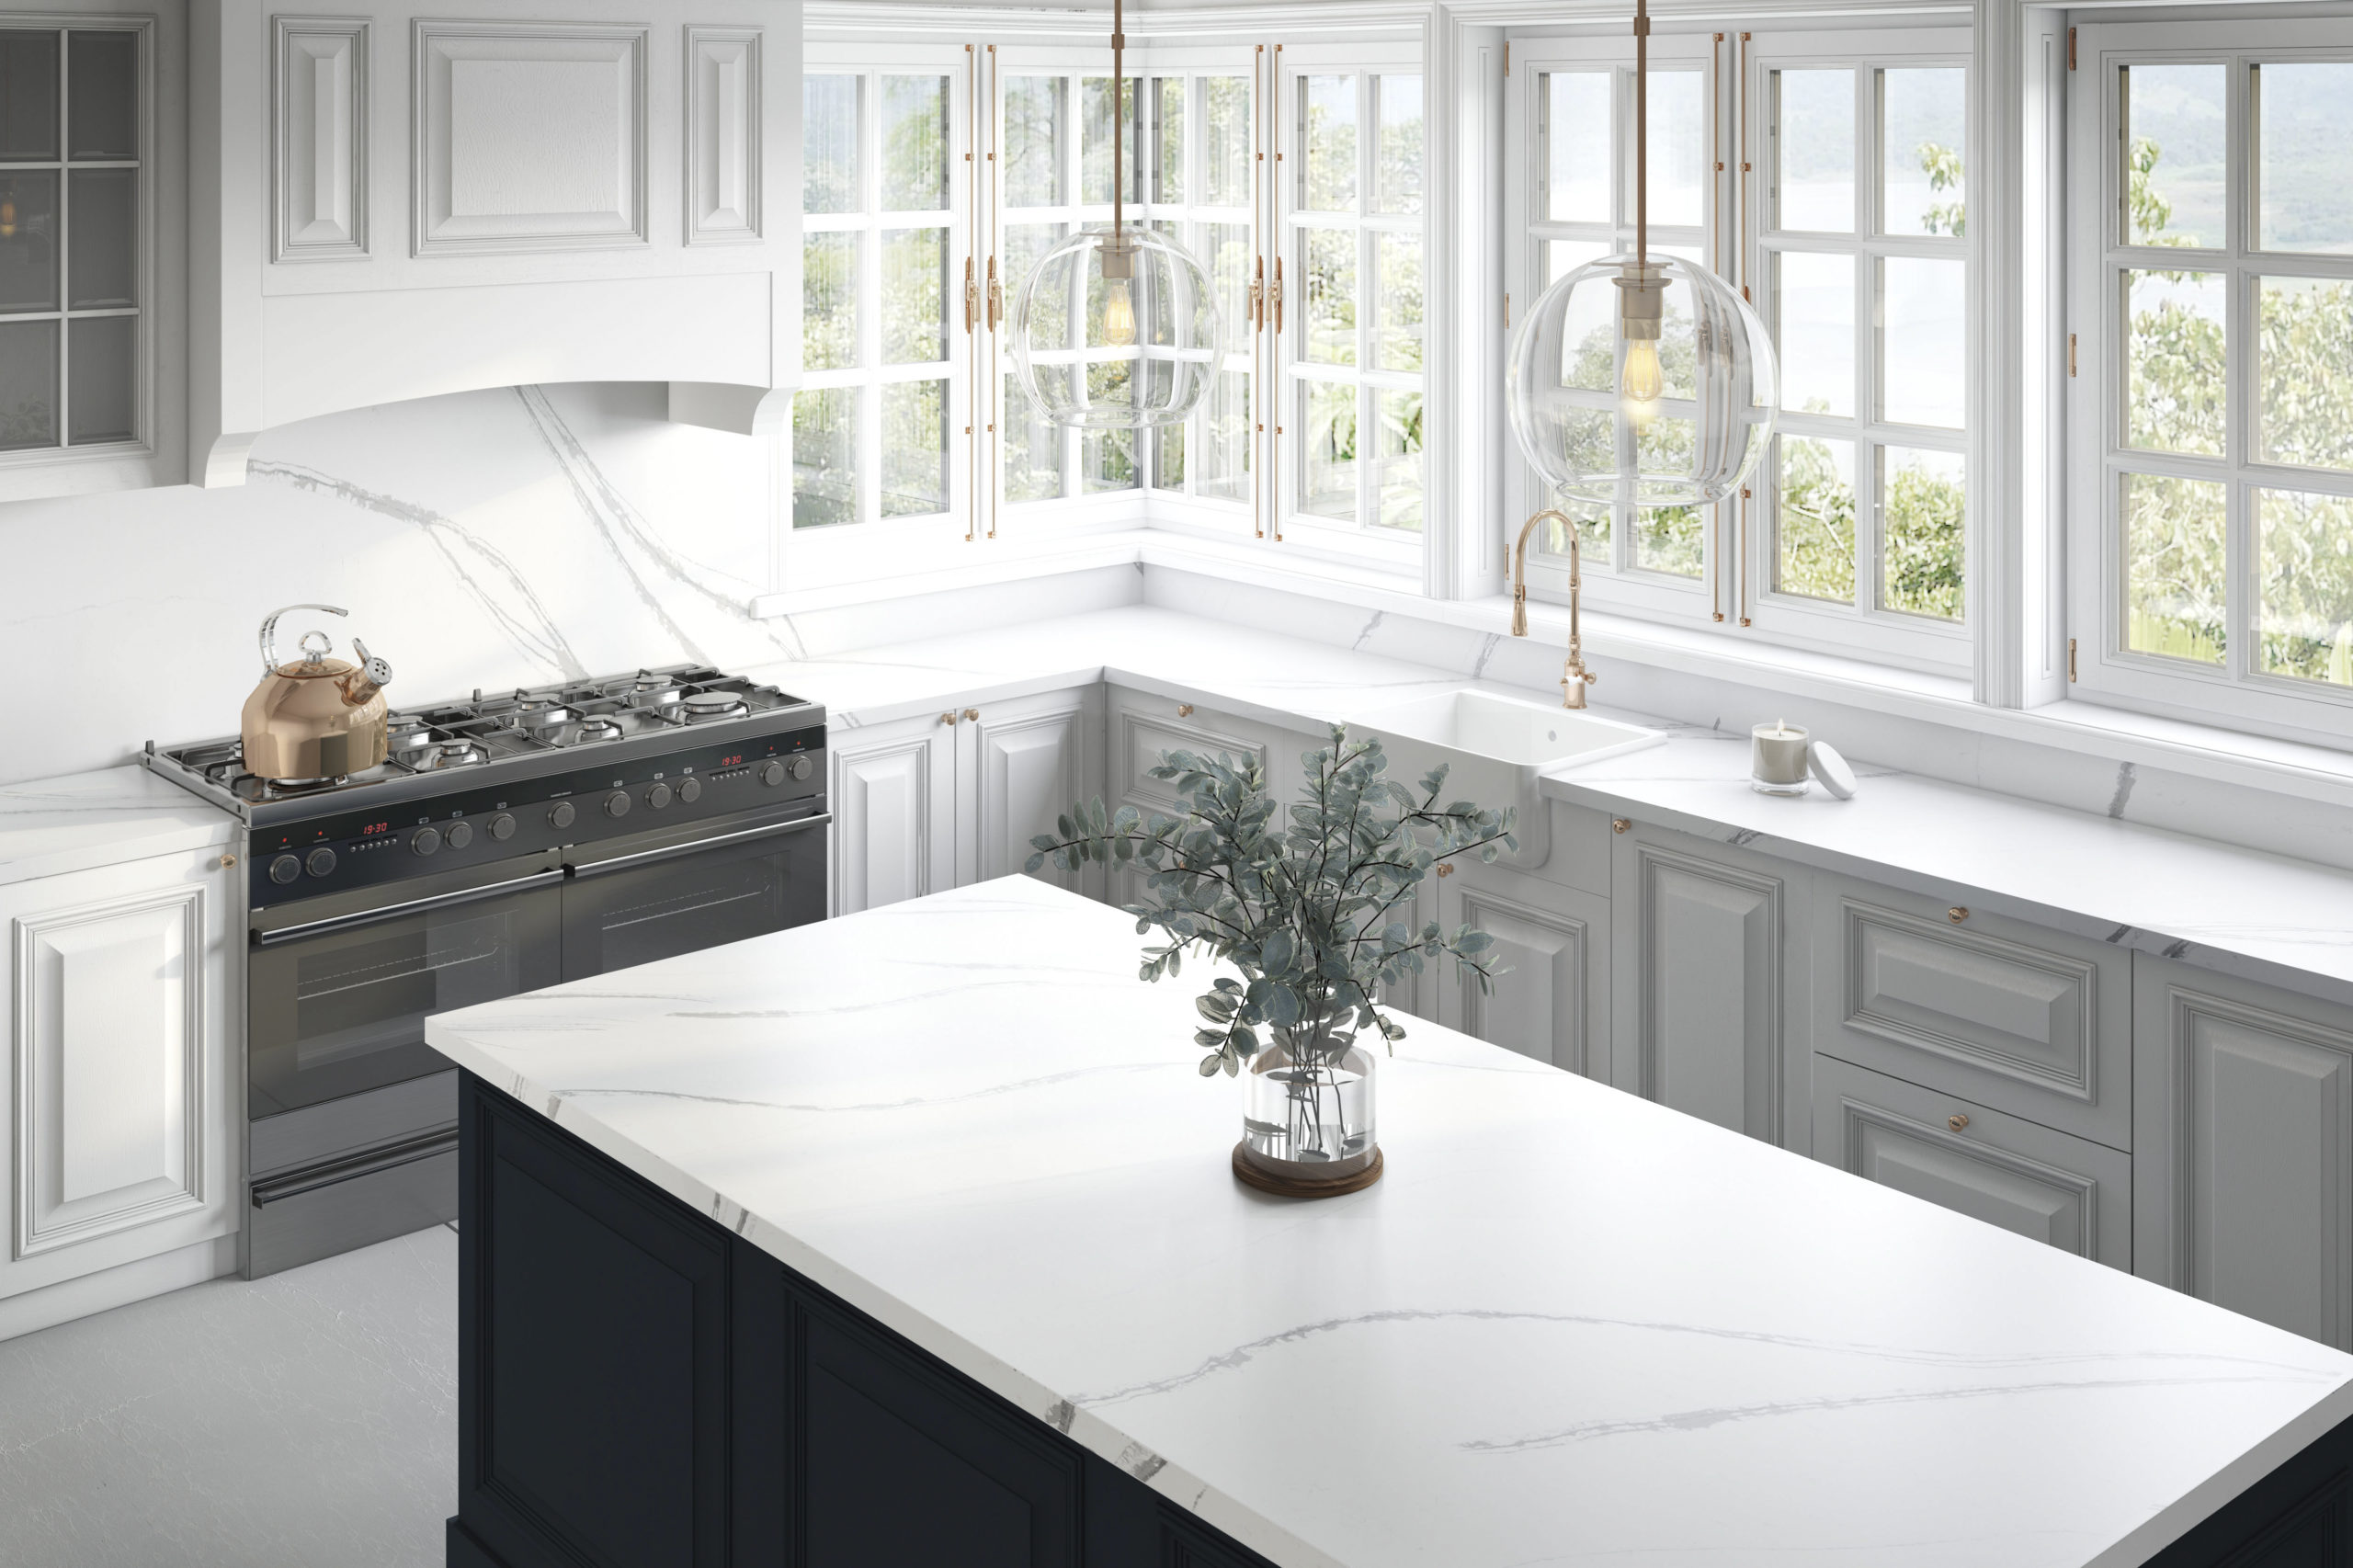 Kitchen Design Trends for 2021 Front Range Stone Countertops